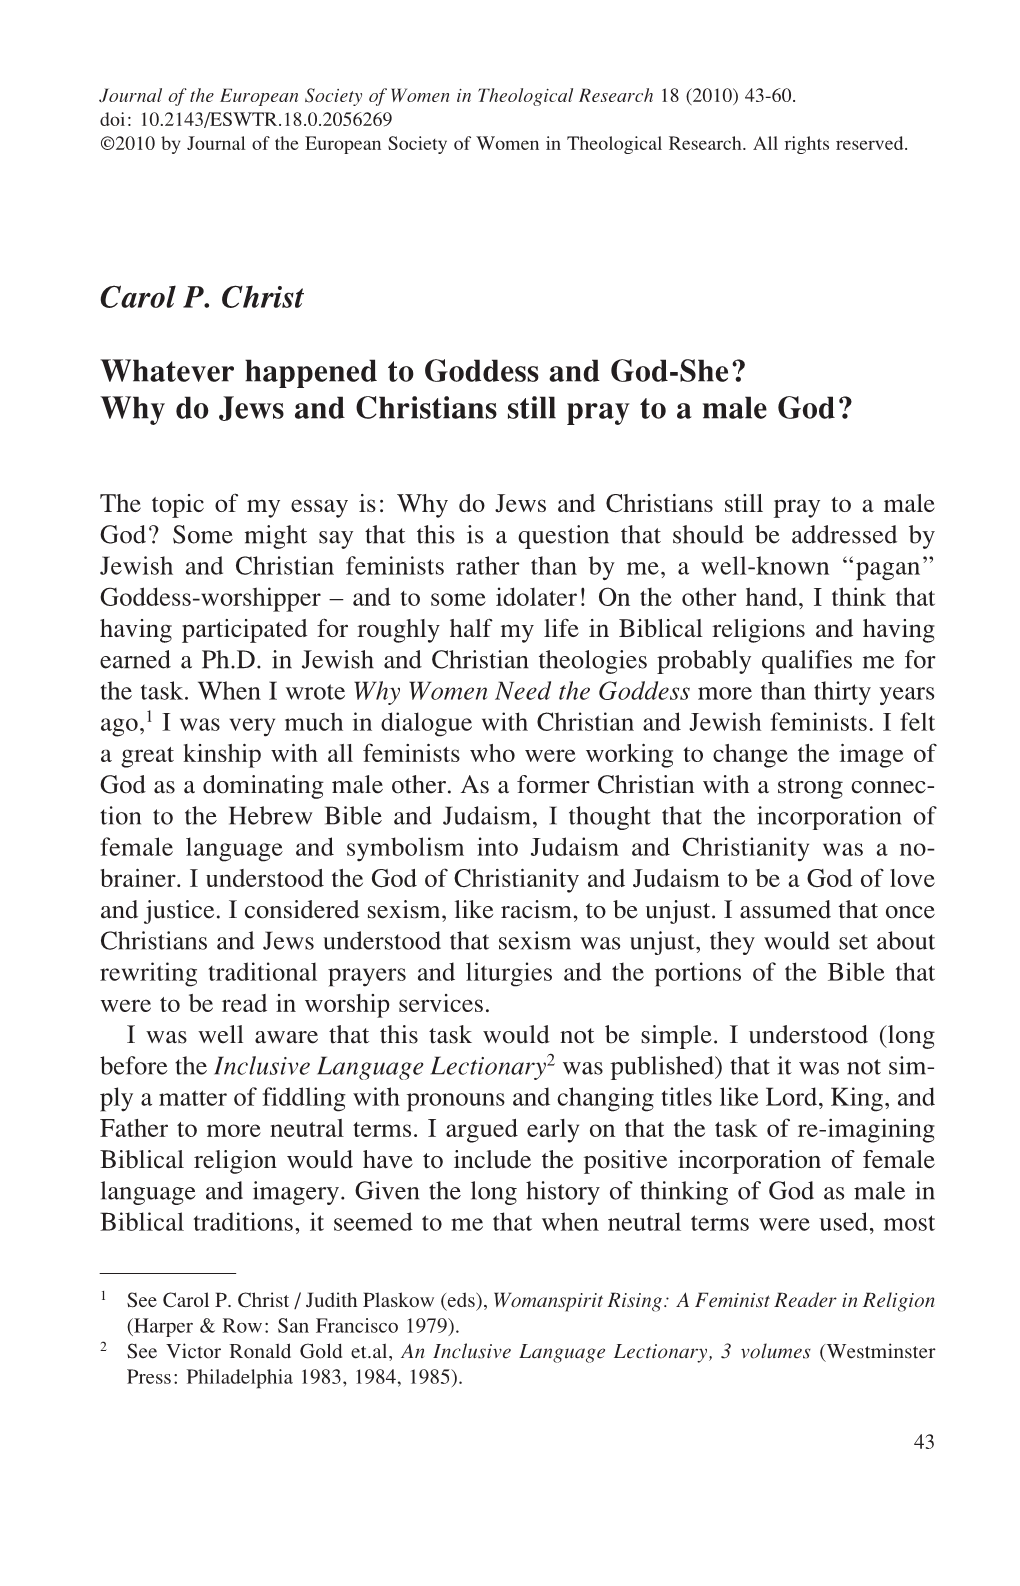 Carol P. Christ Whatever Happened to Goddess and God-She?